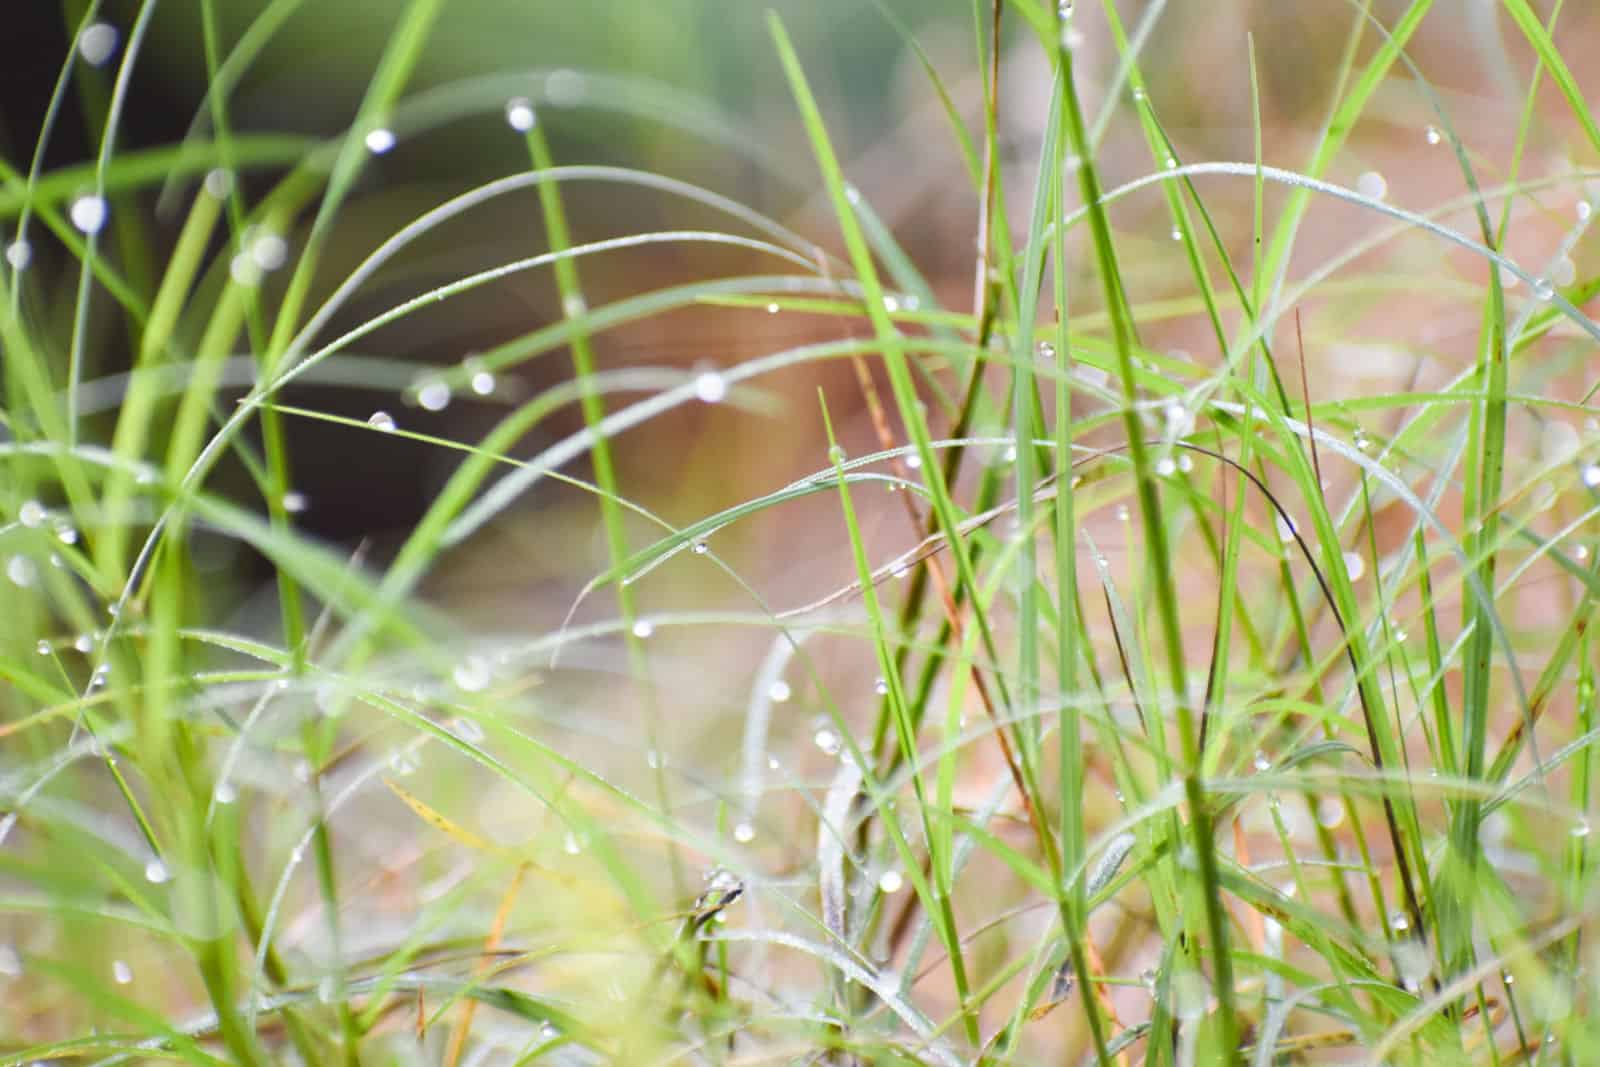 wet durva grass ( Cynodon dactylon) better known as Bermuda grass during rainy season.